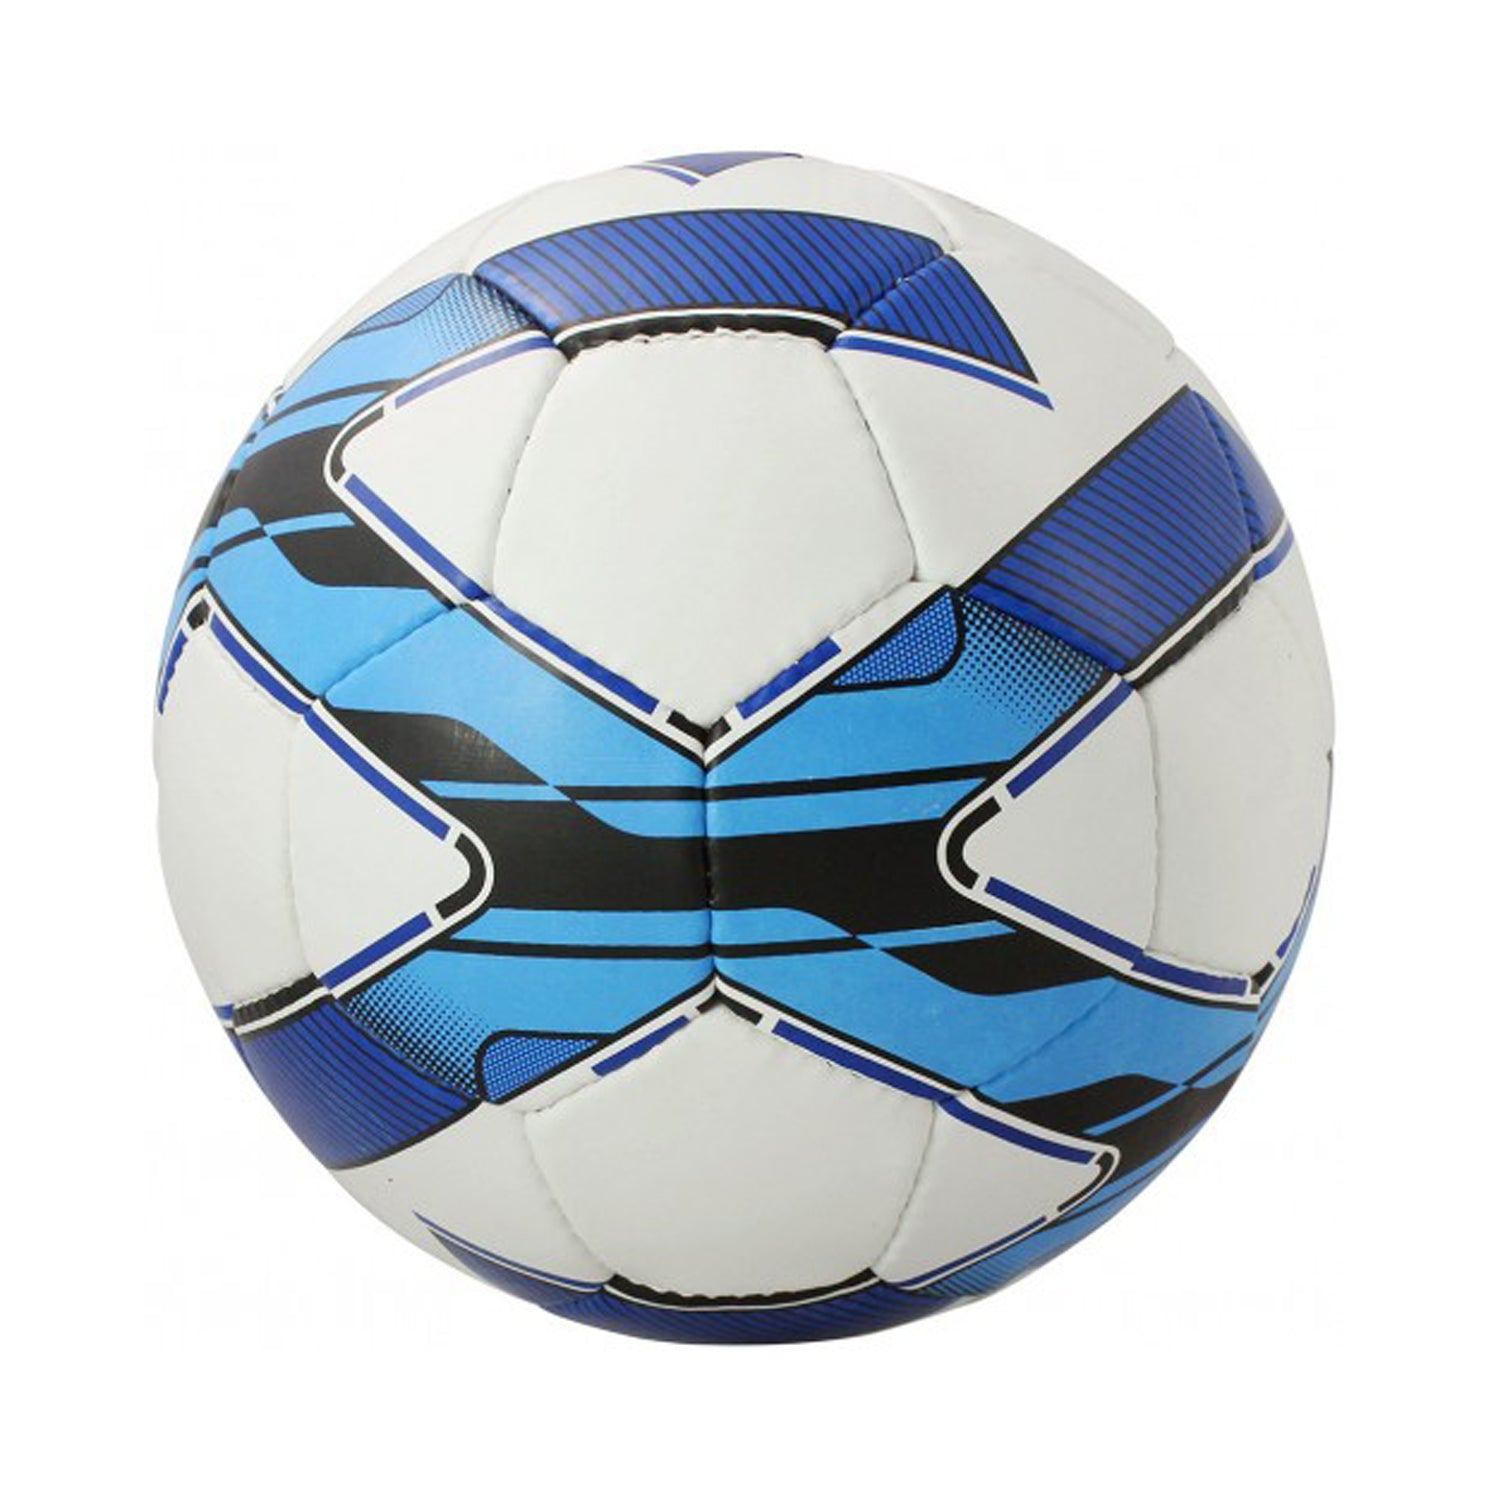 Cosco Milano Football, White/Blue (Size 4) - Best Price online Prokicksports.com